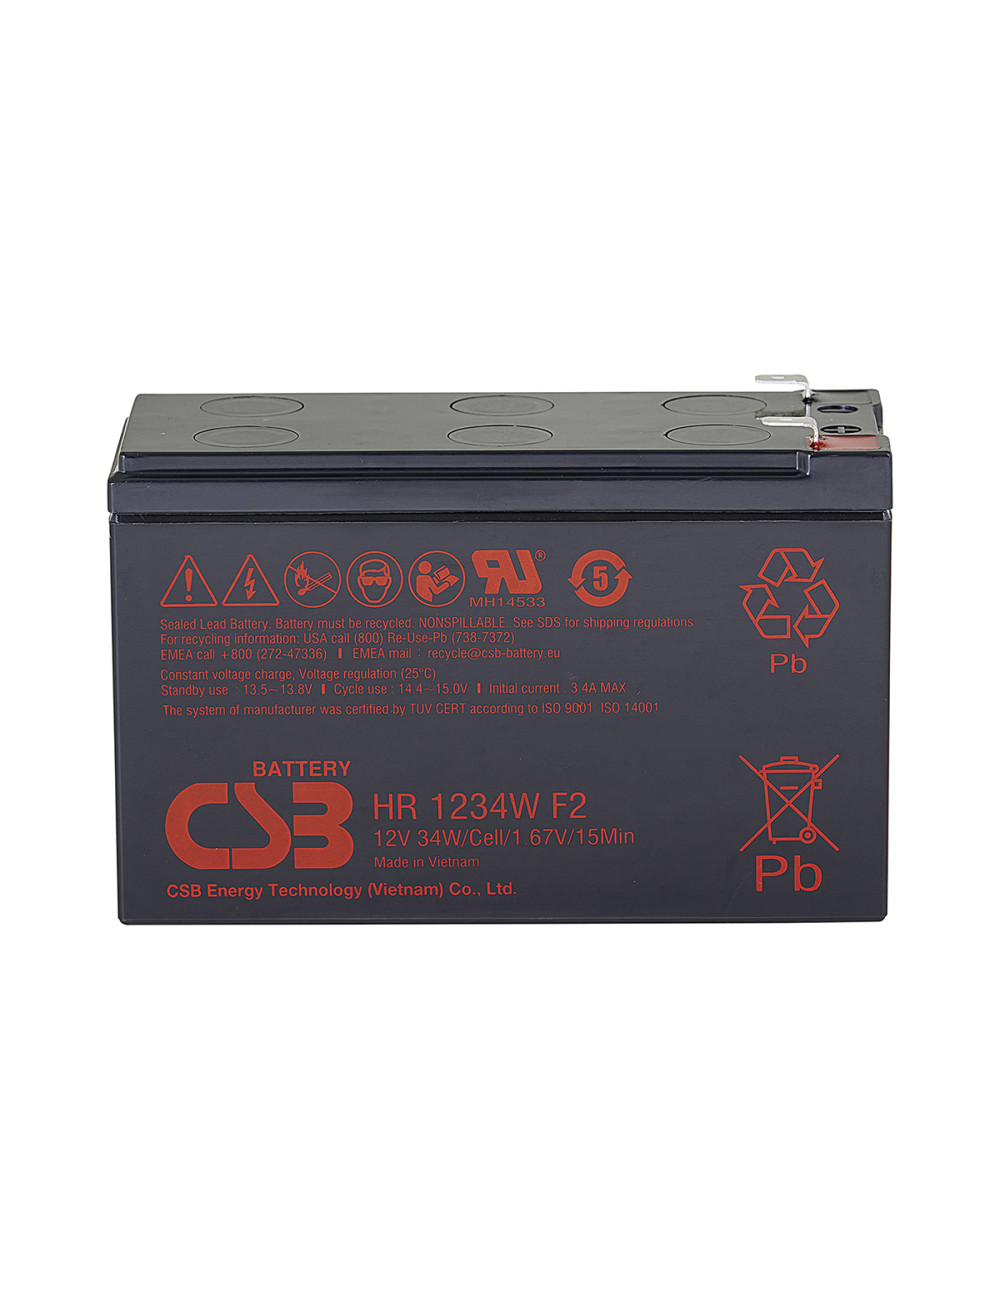 Bateria para UPS 12V 9Ah 34W/célula CSB HR1234W F2 - 1